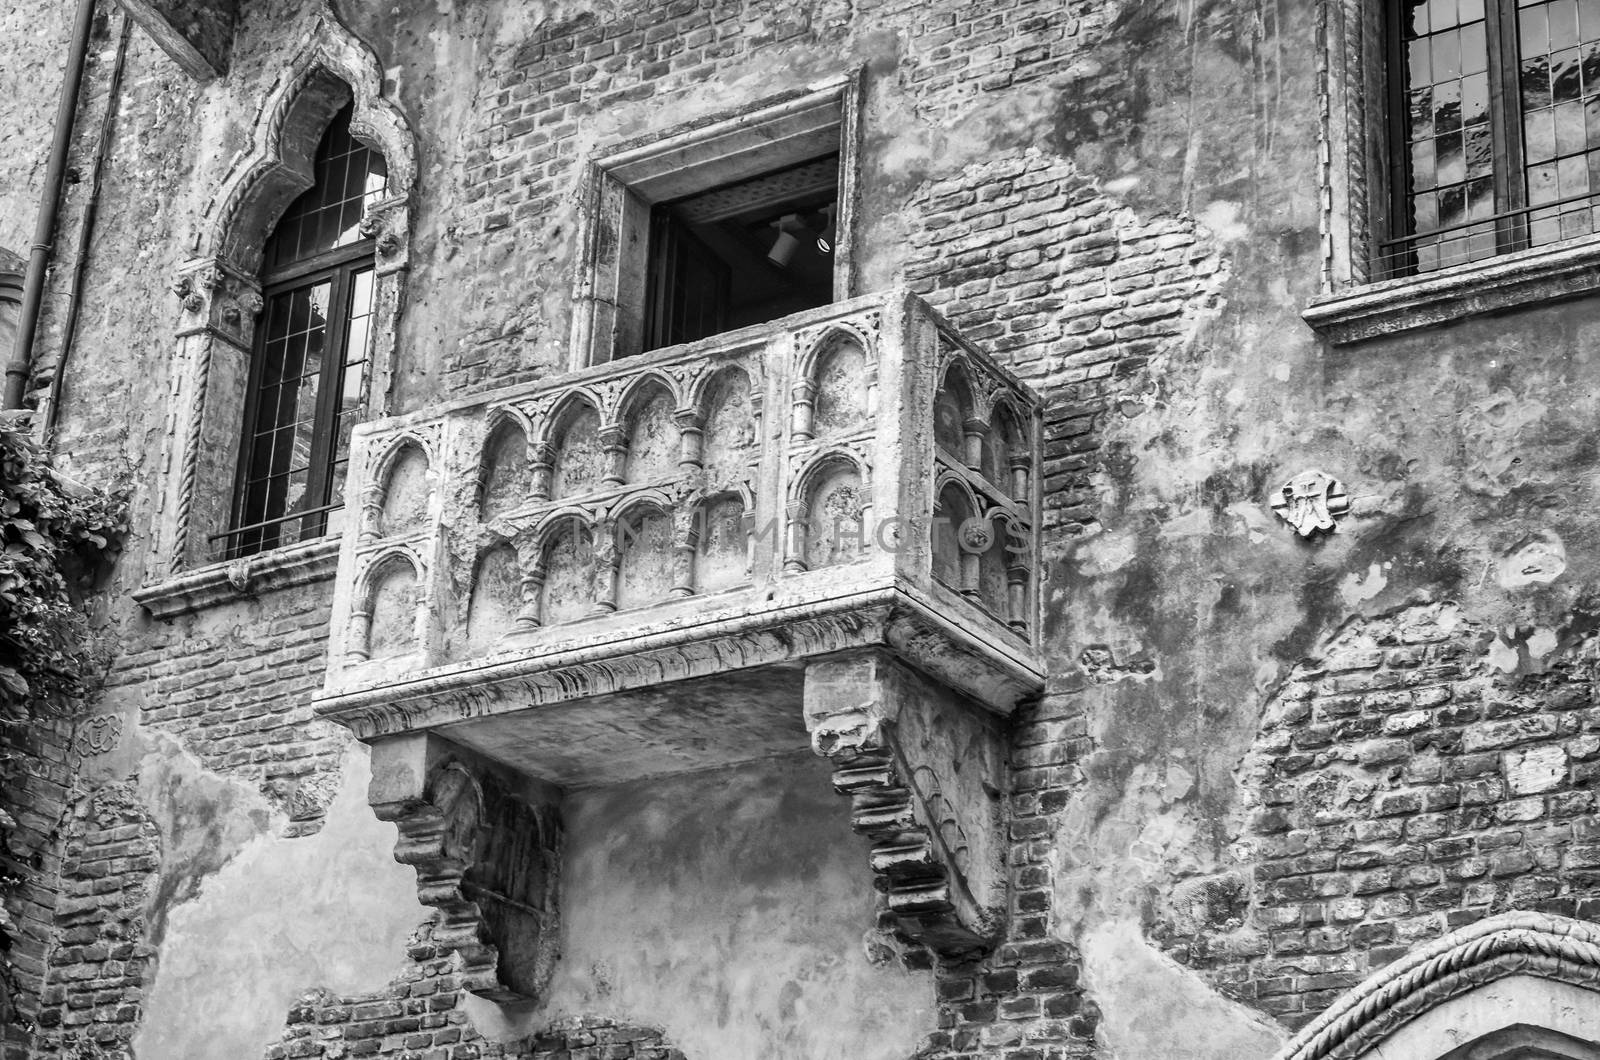 The famous balcony of Romeo and Juliet in Verona, Italy by marcorubino